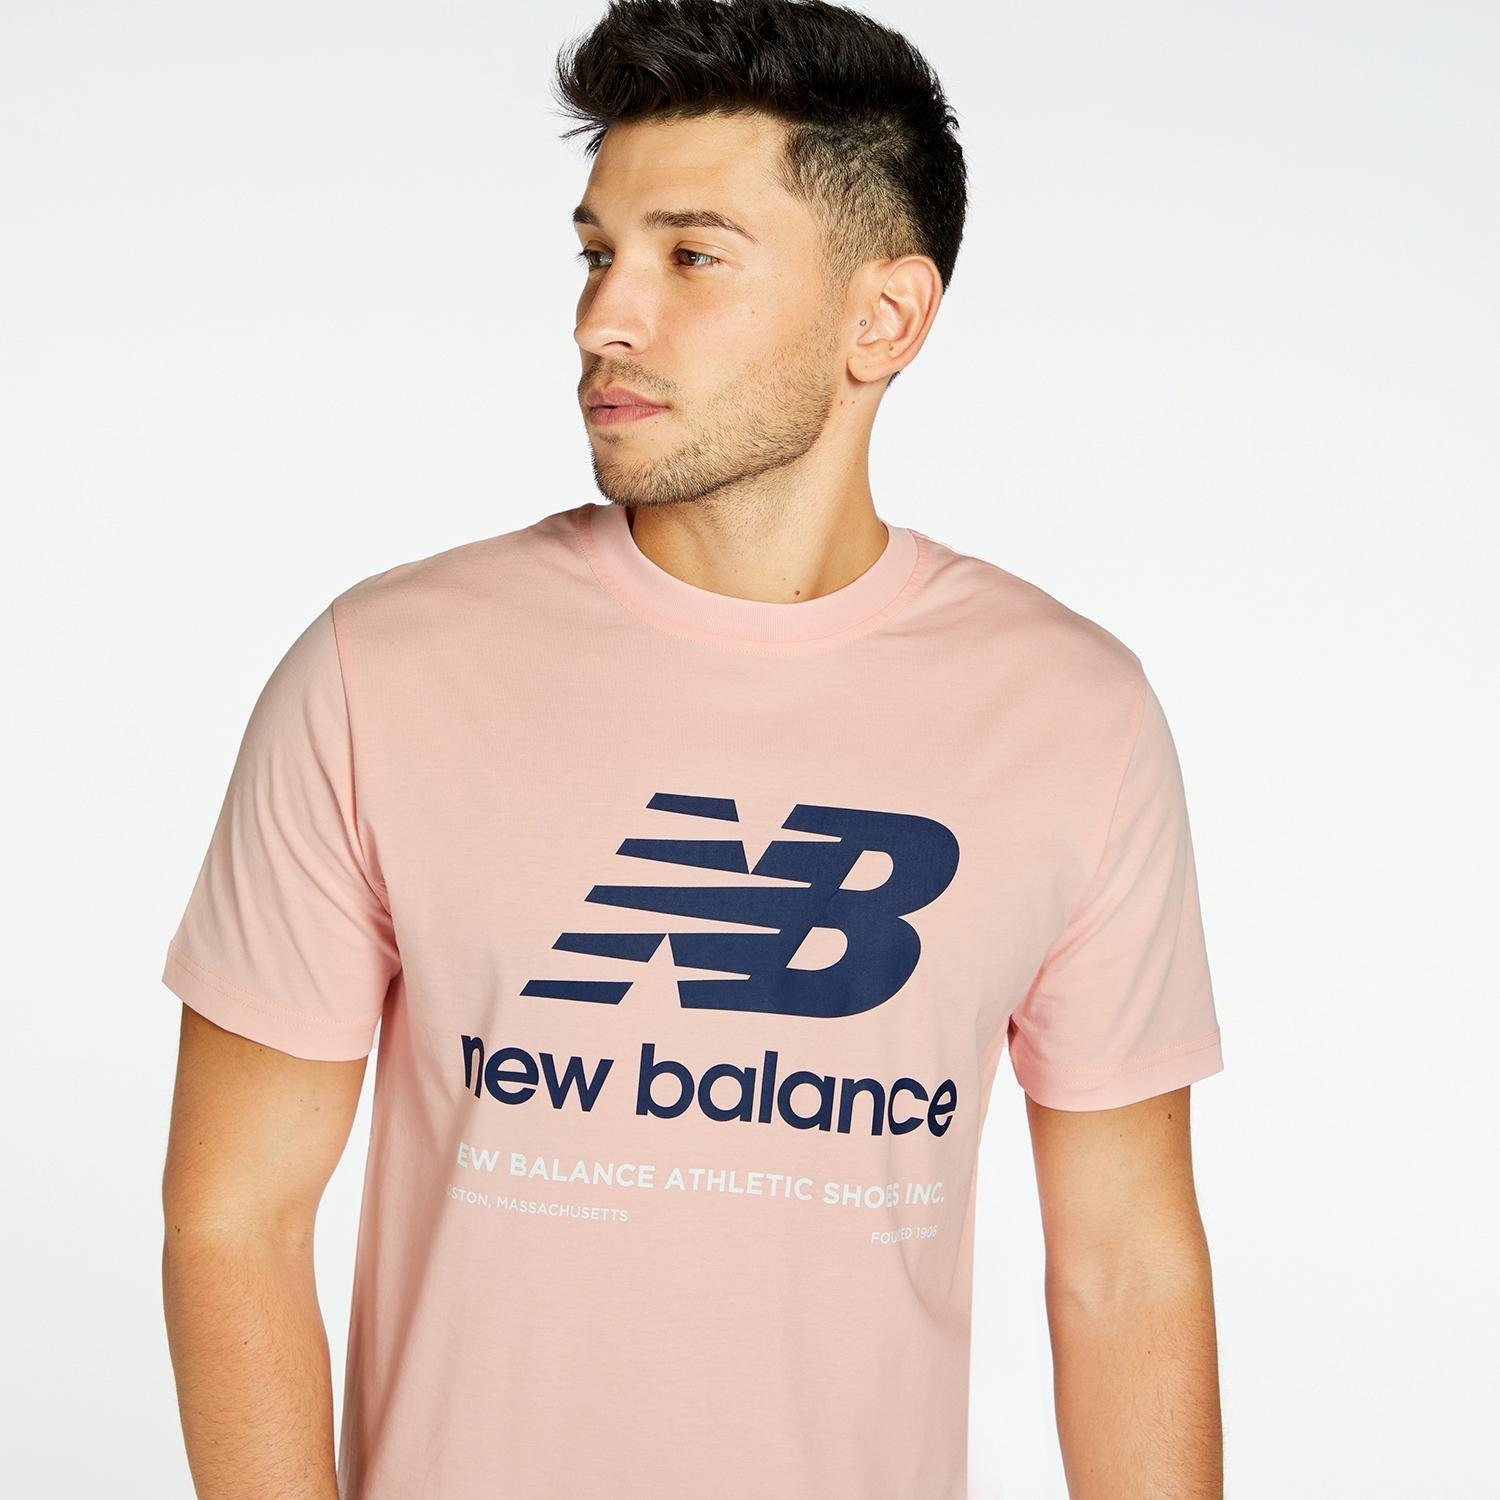 New Balance New balance athletic shirt roze heren heren